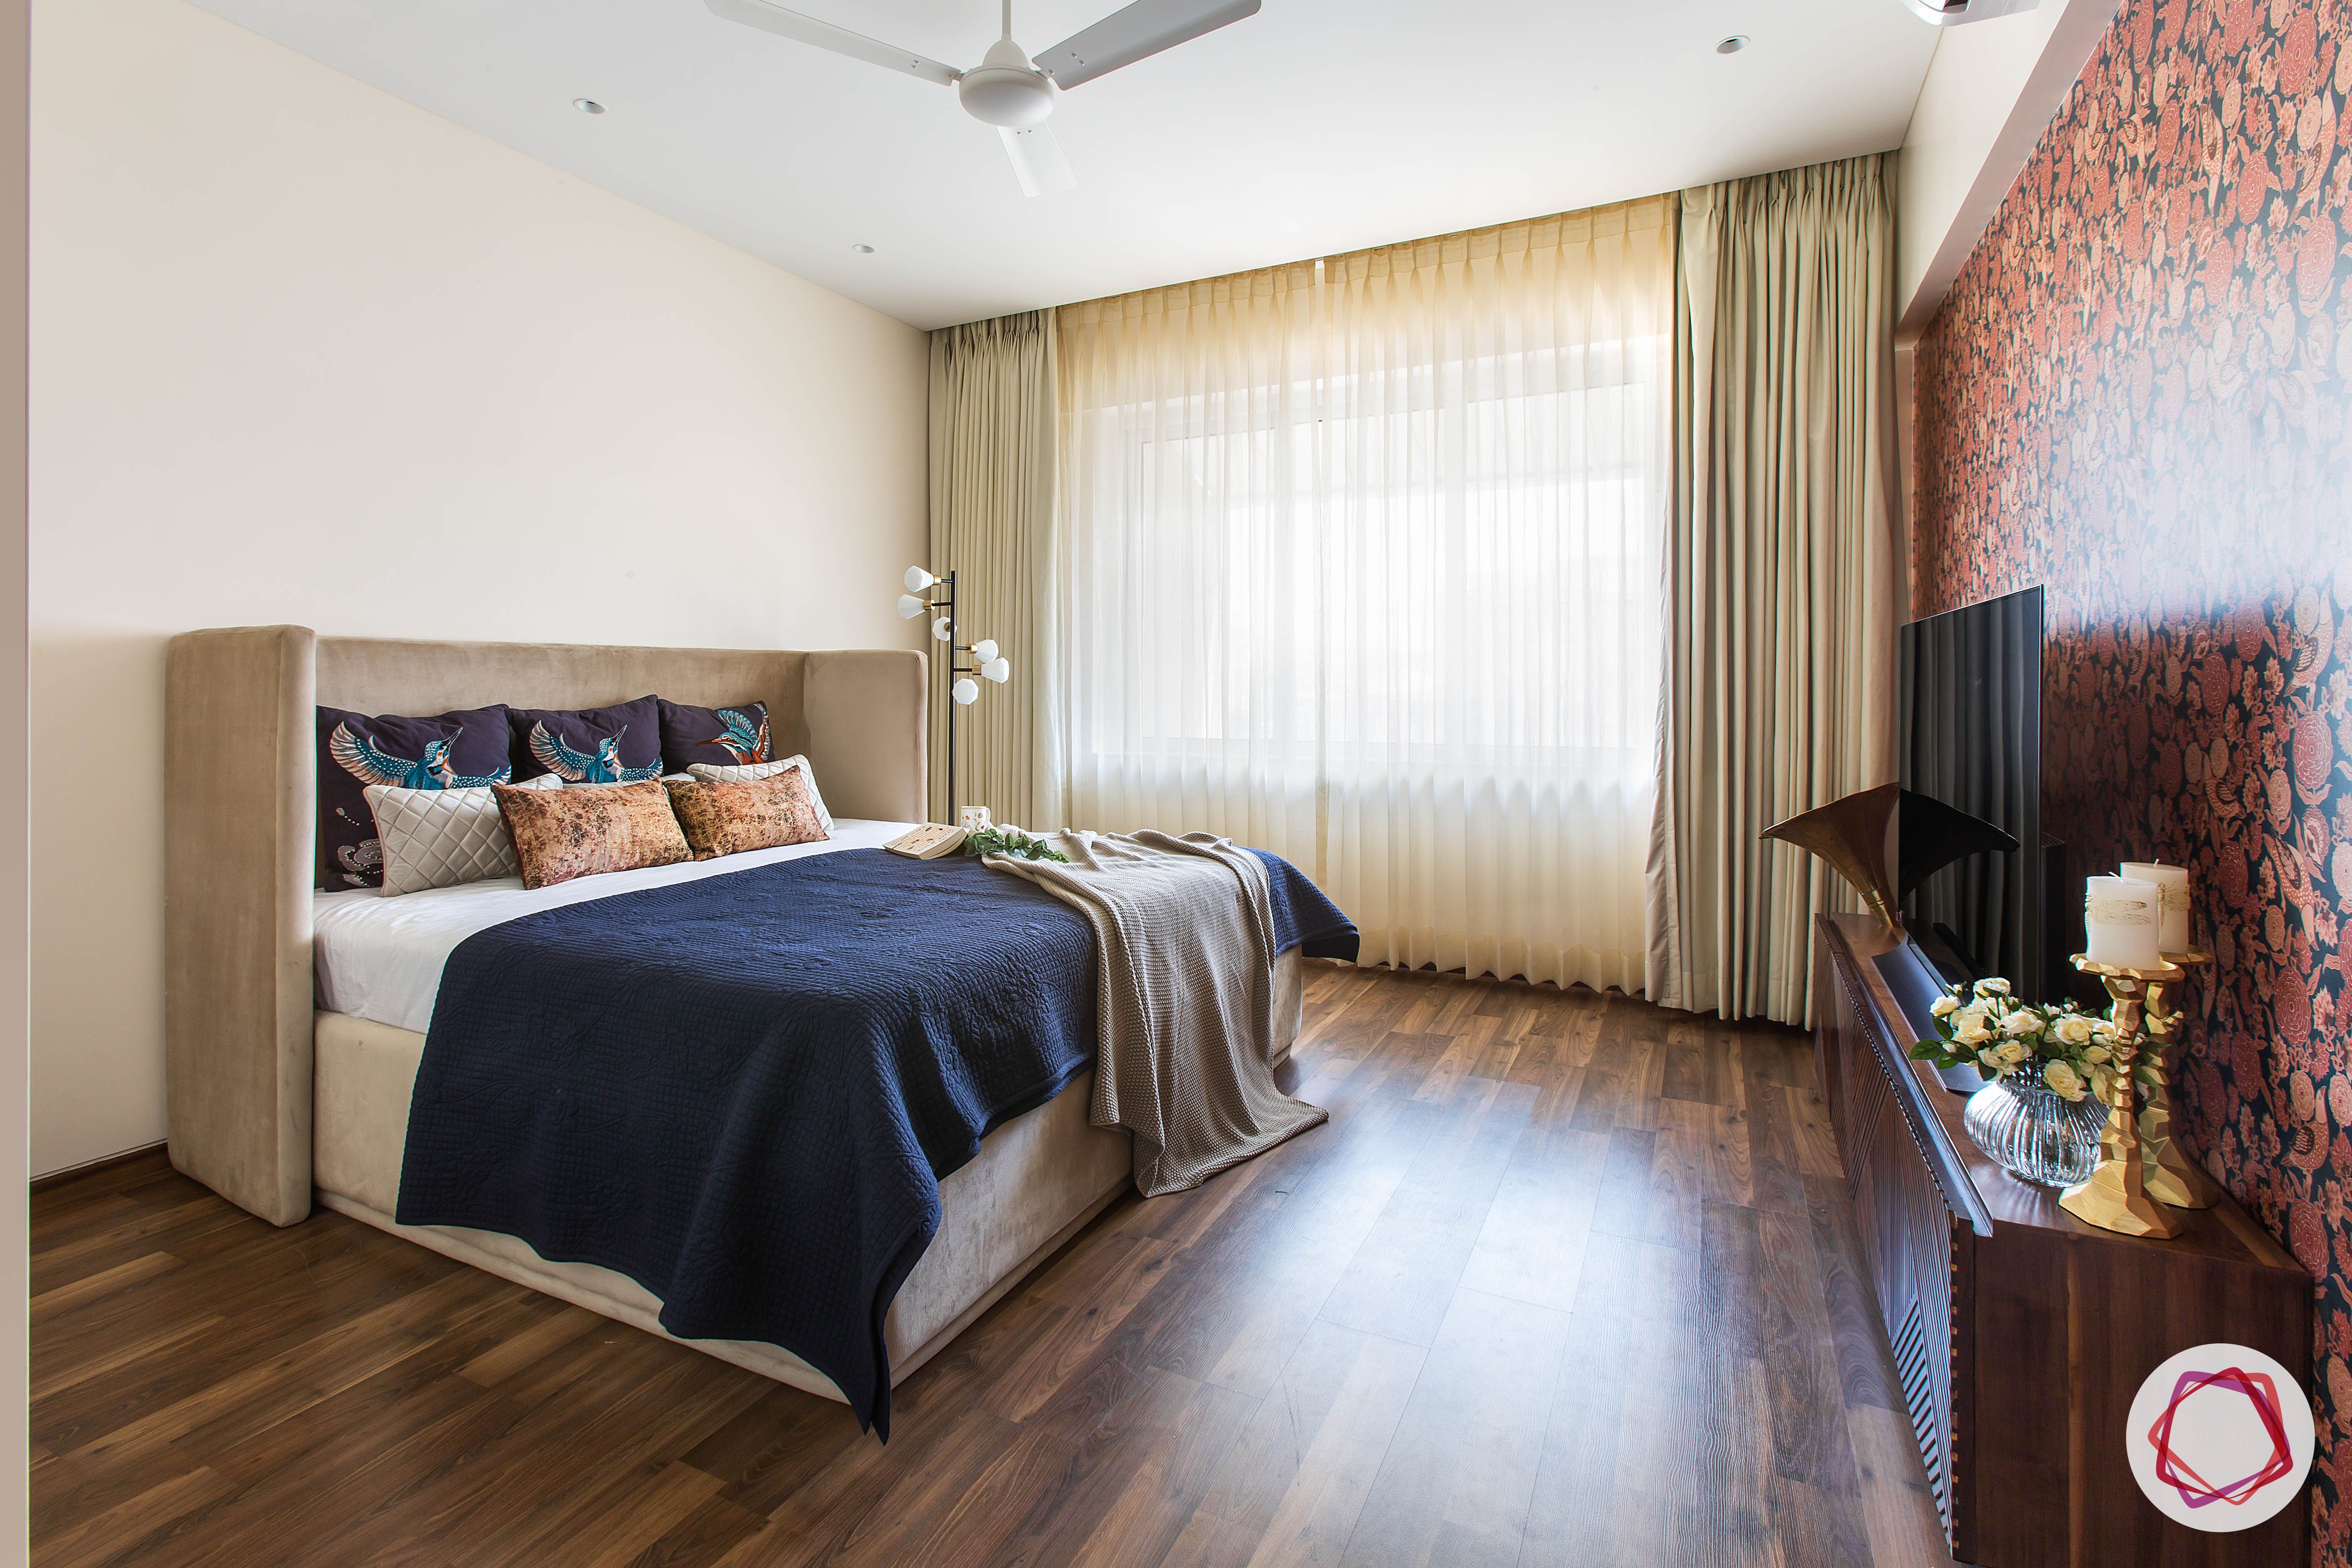 4bhk house plan-guest room designs-upholstered bed-floral wallpaper-wooden flooring 